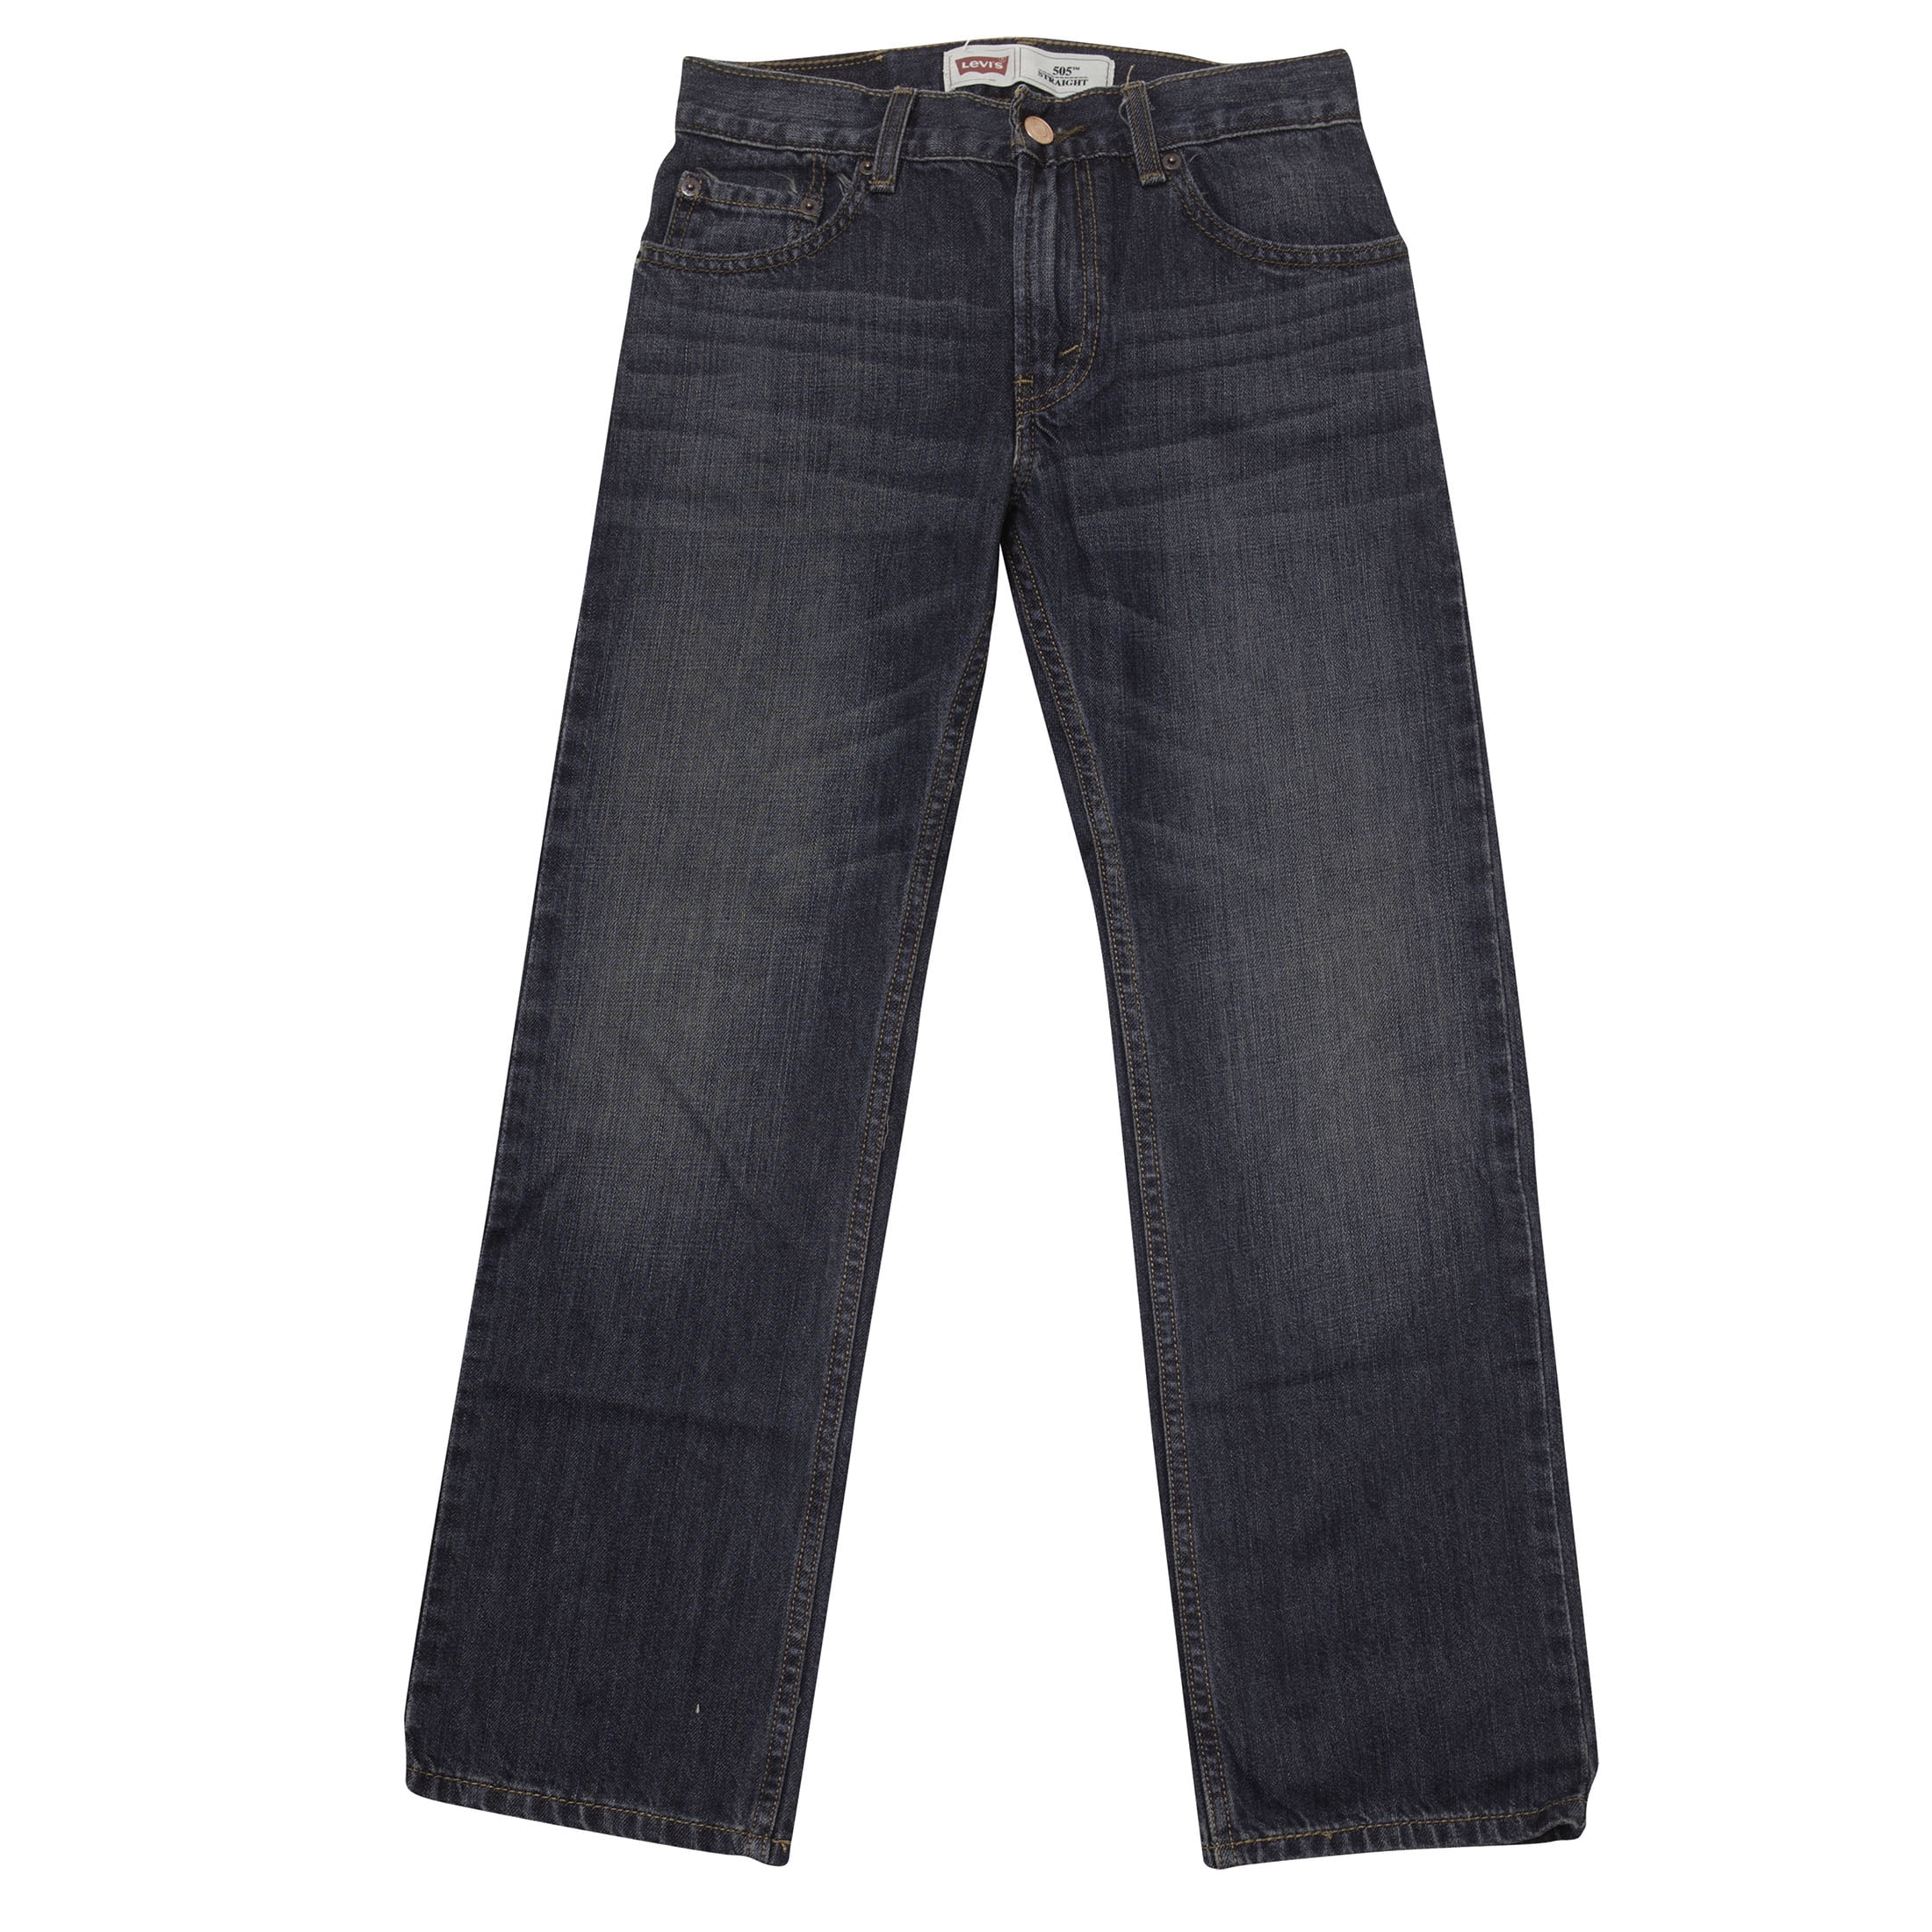 Levi's Boys' 505 Regular Fit Jeans, Sizes 4-20 - Walmart.com